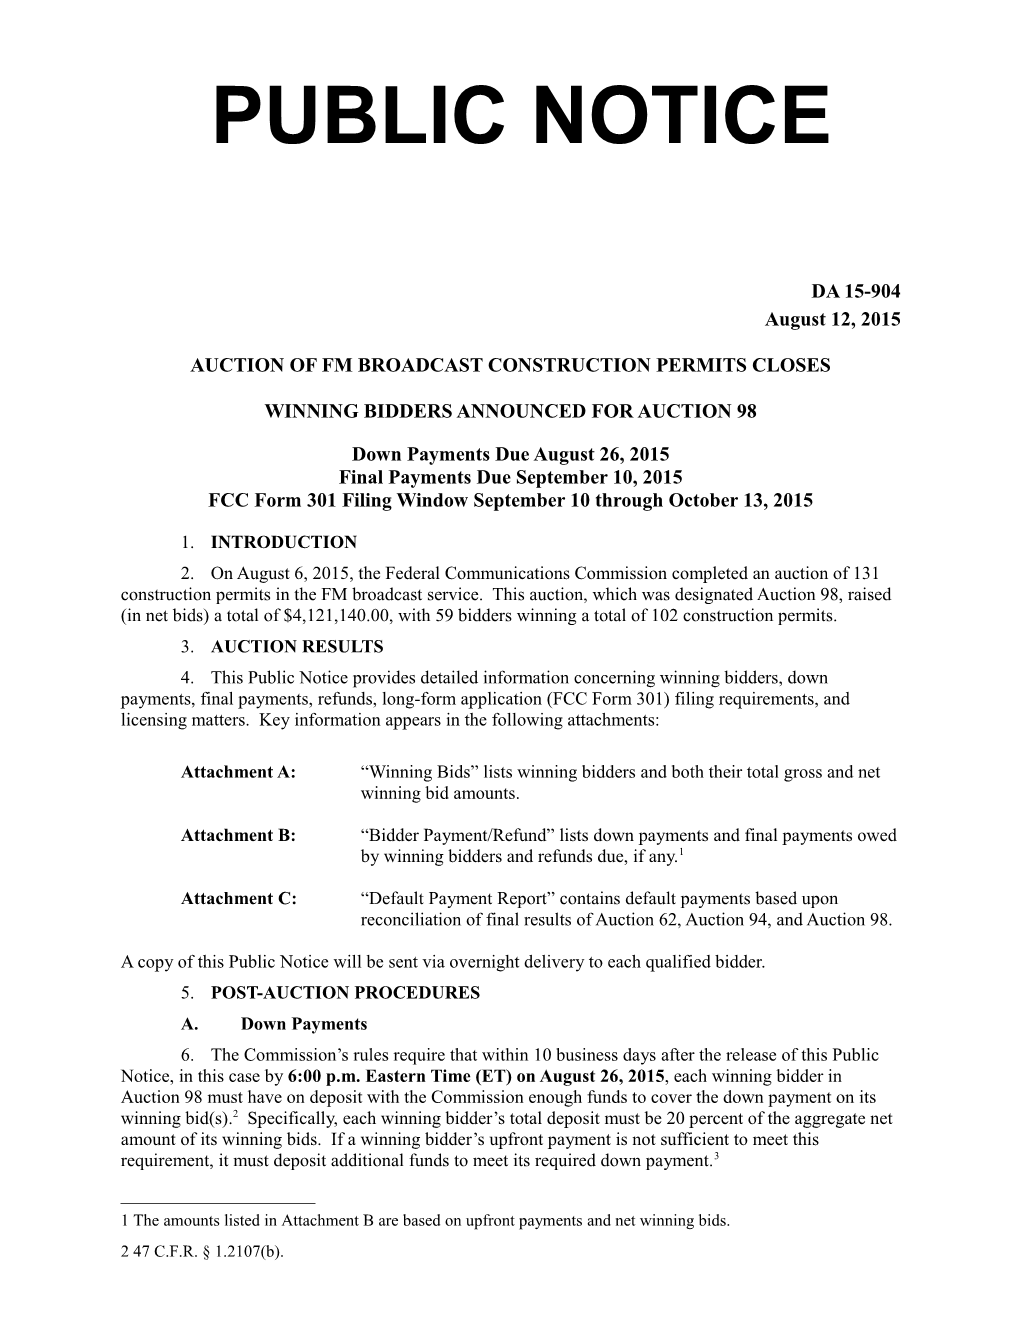 Auction of Fm Broadcast Construction Permits Closes